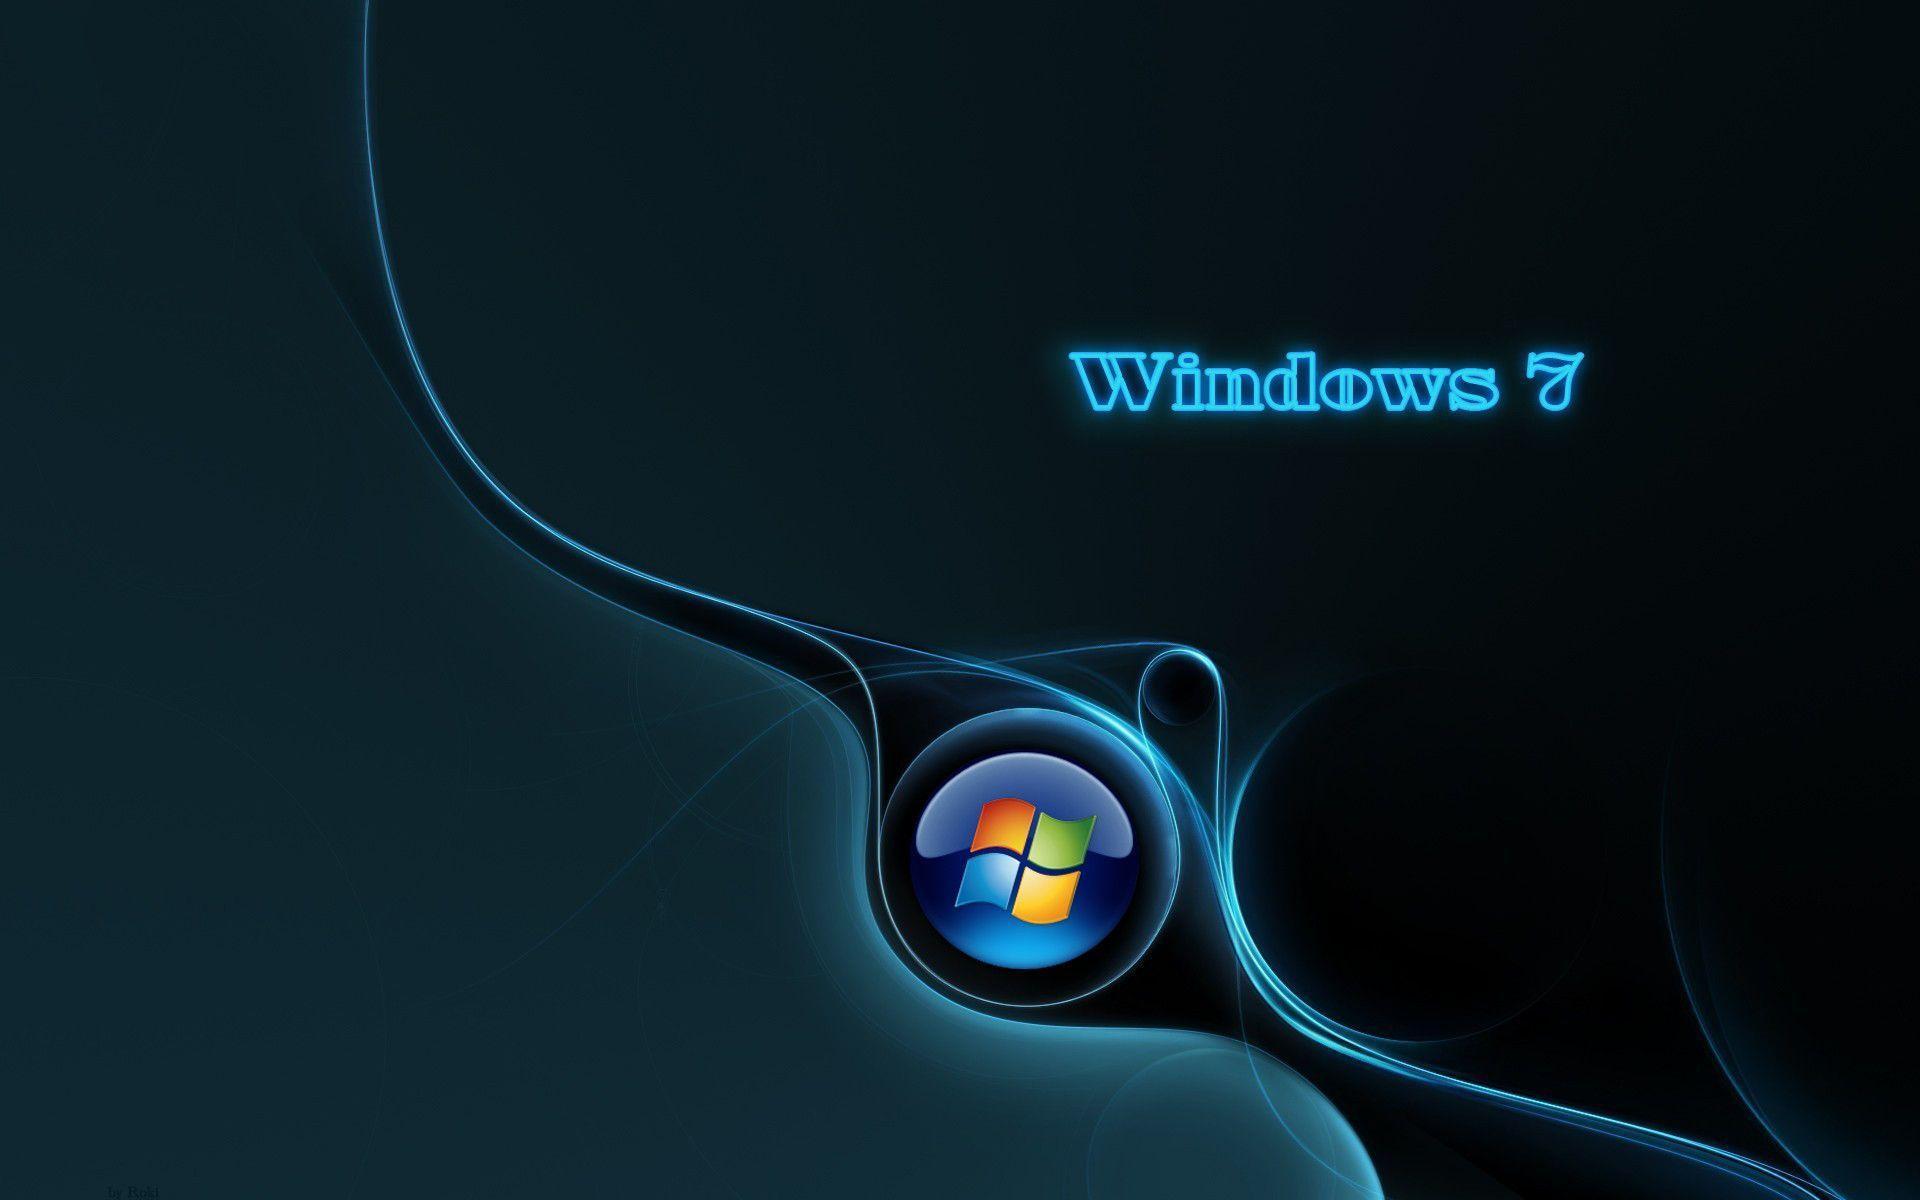 Windows 7 Background HD Wallpaper Wallpaper. iWallDesk